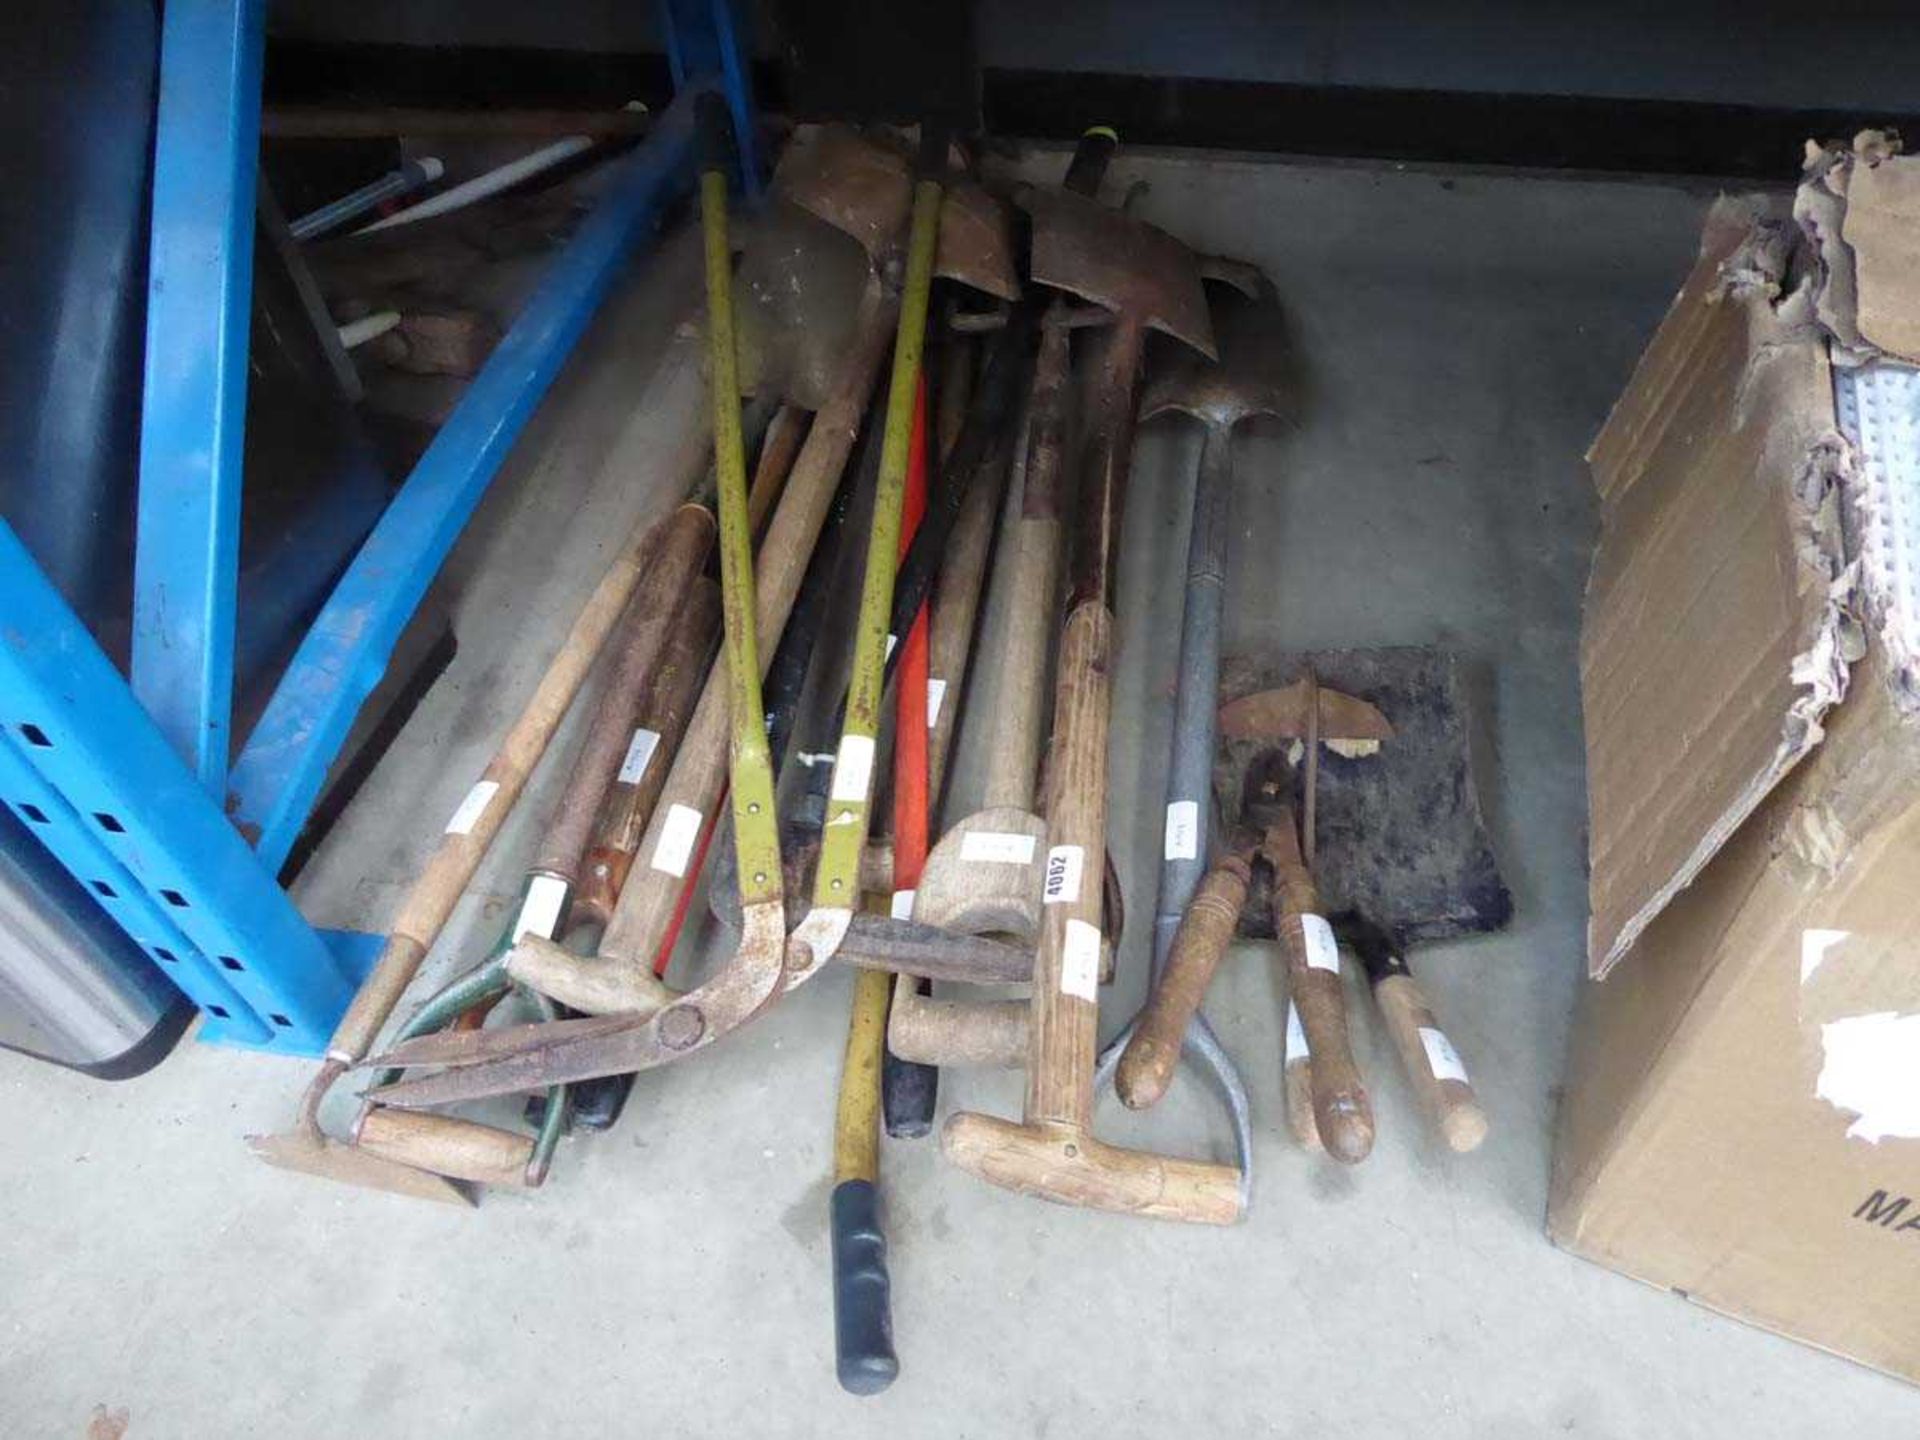 Quantity of assorted garden tools